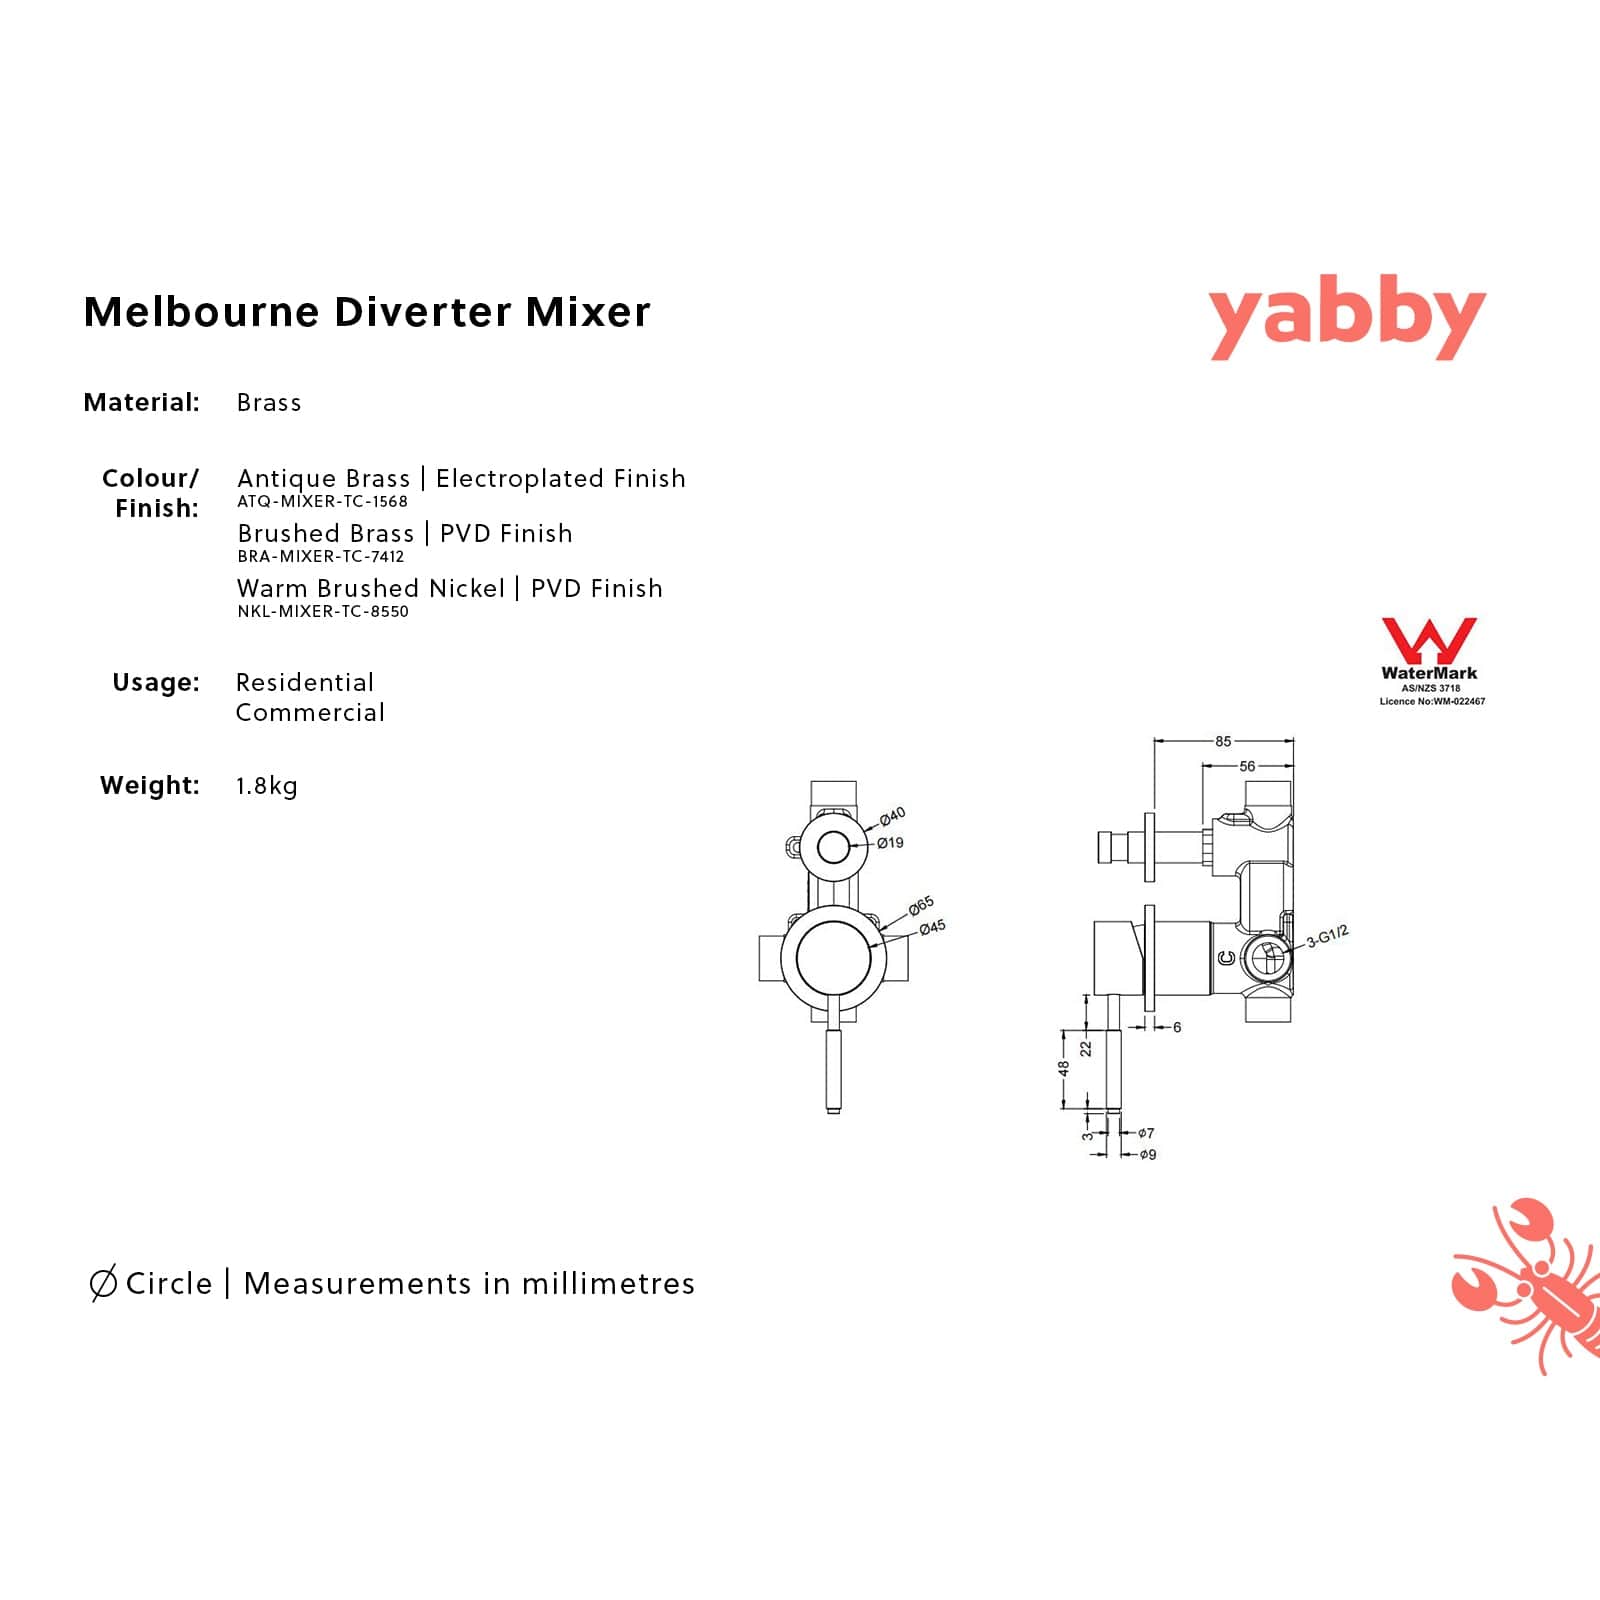 TileCloud TAPWARE Melbourne Diverter Mixer Brushed Brass